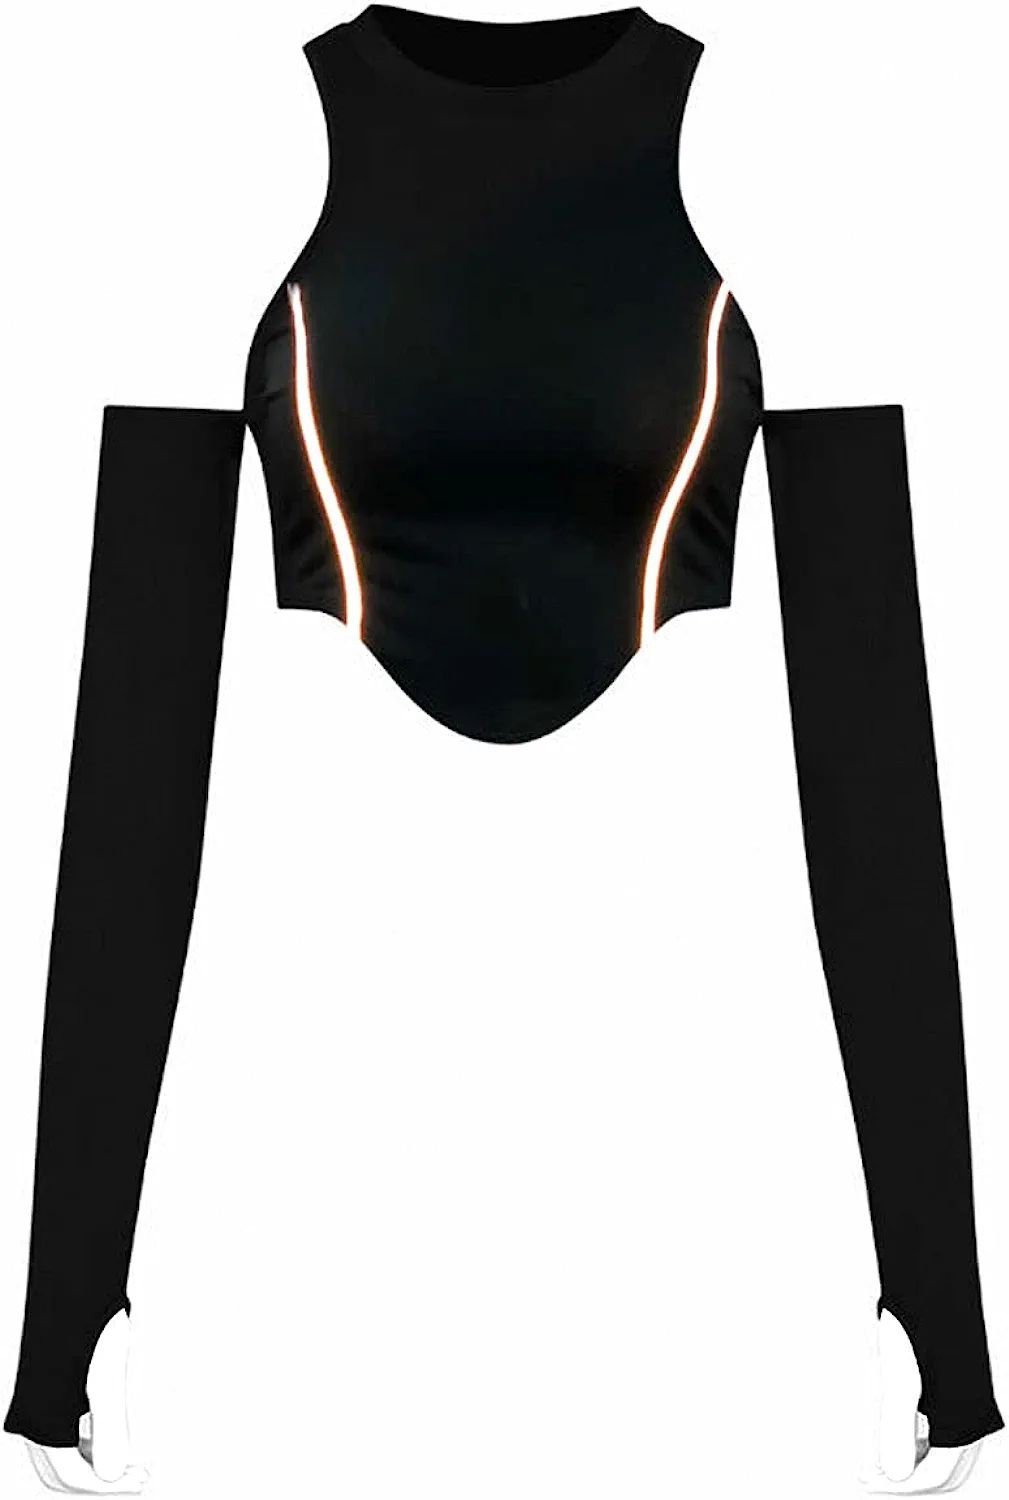 CAPE CLIQUE Sexy Crop Top for Women Reflective Halter Neck Long Sleeves Bodycon Hollow Out Shirts | Amazon (US)